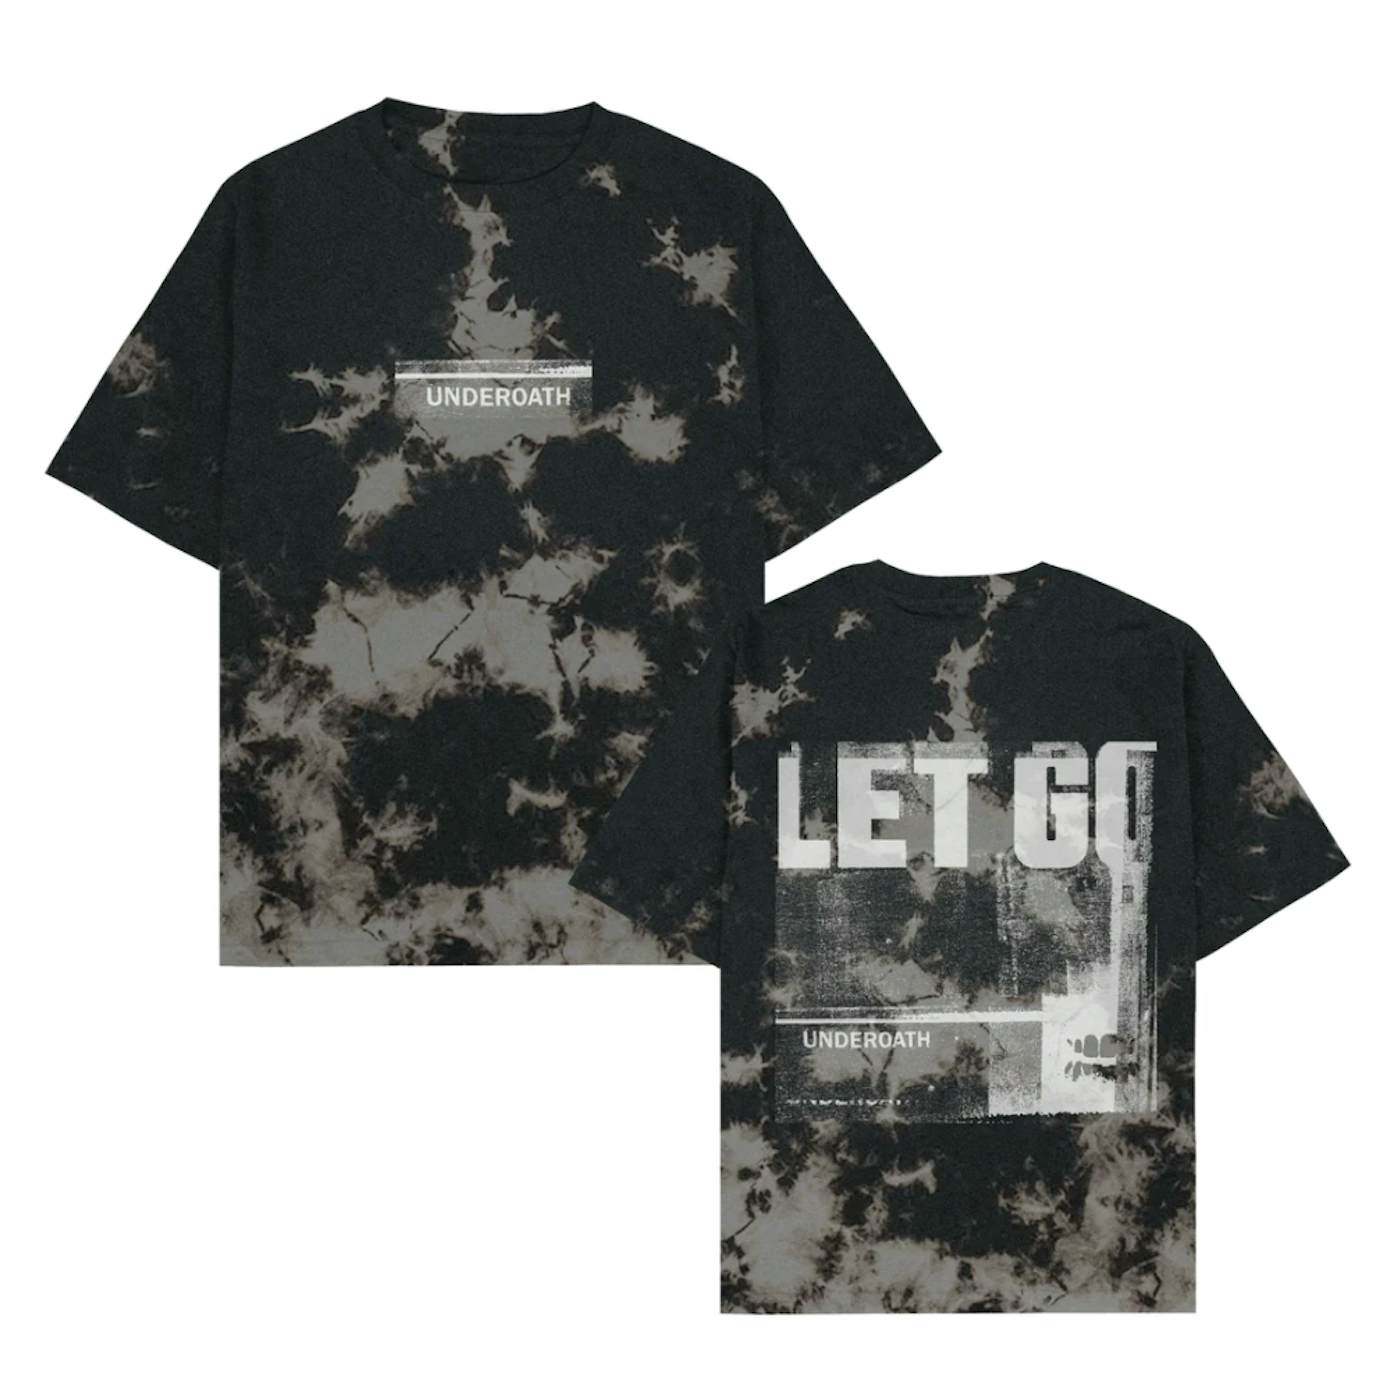 Underoath "Let Go" T-Shirt